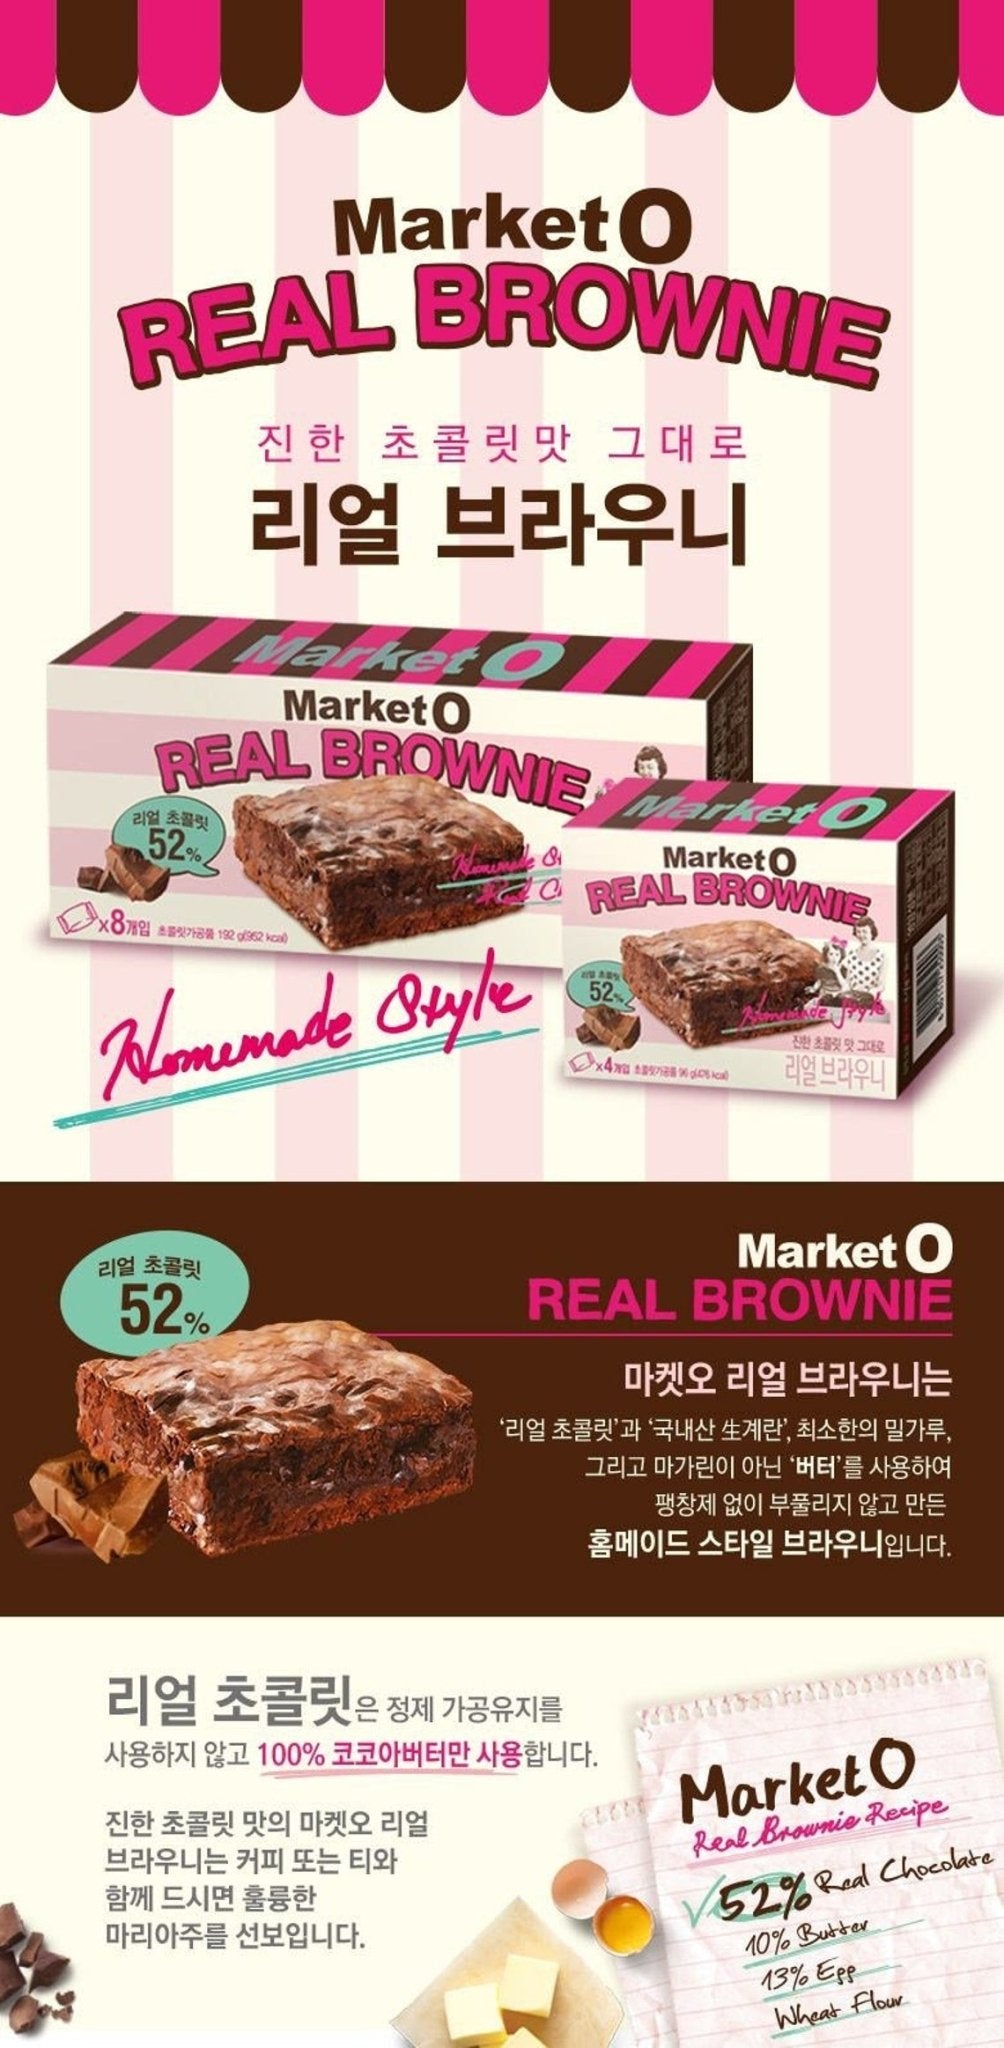 KOREAN K-FOOD [ORION] Market O Real Brownie (6pcs)